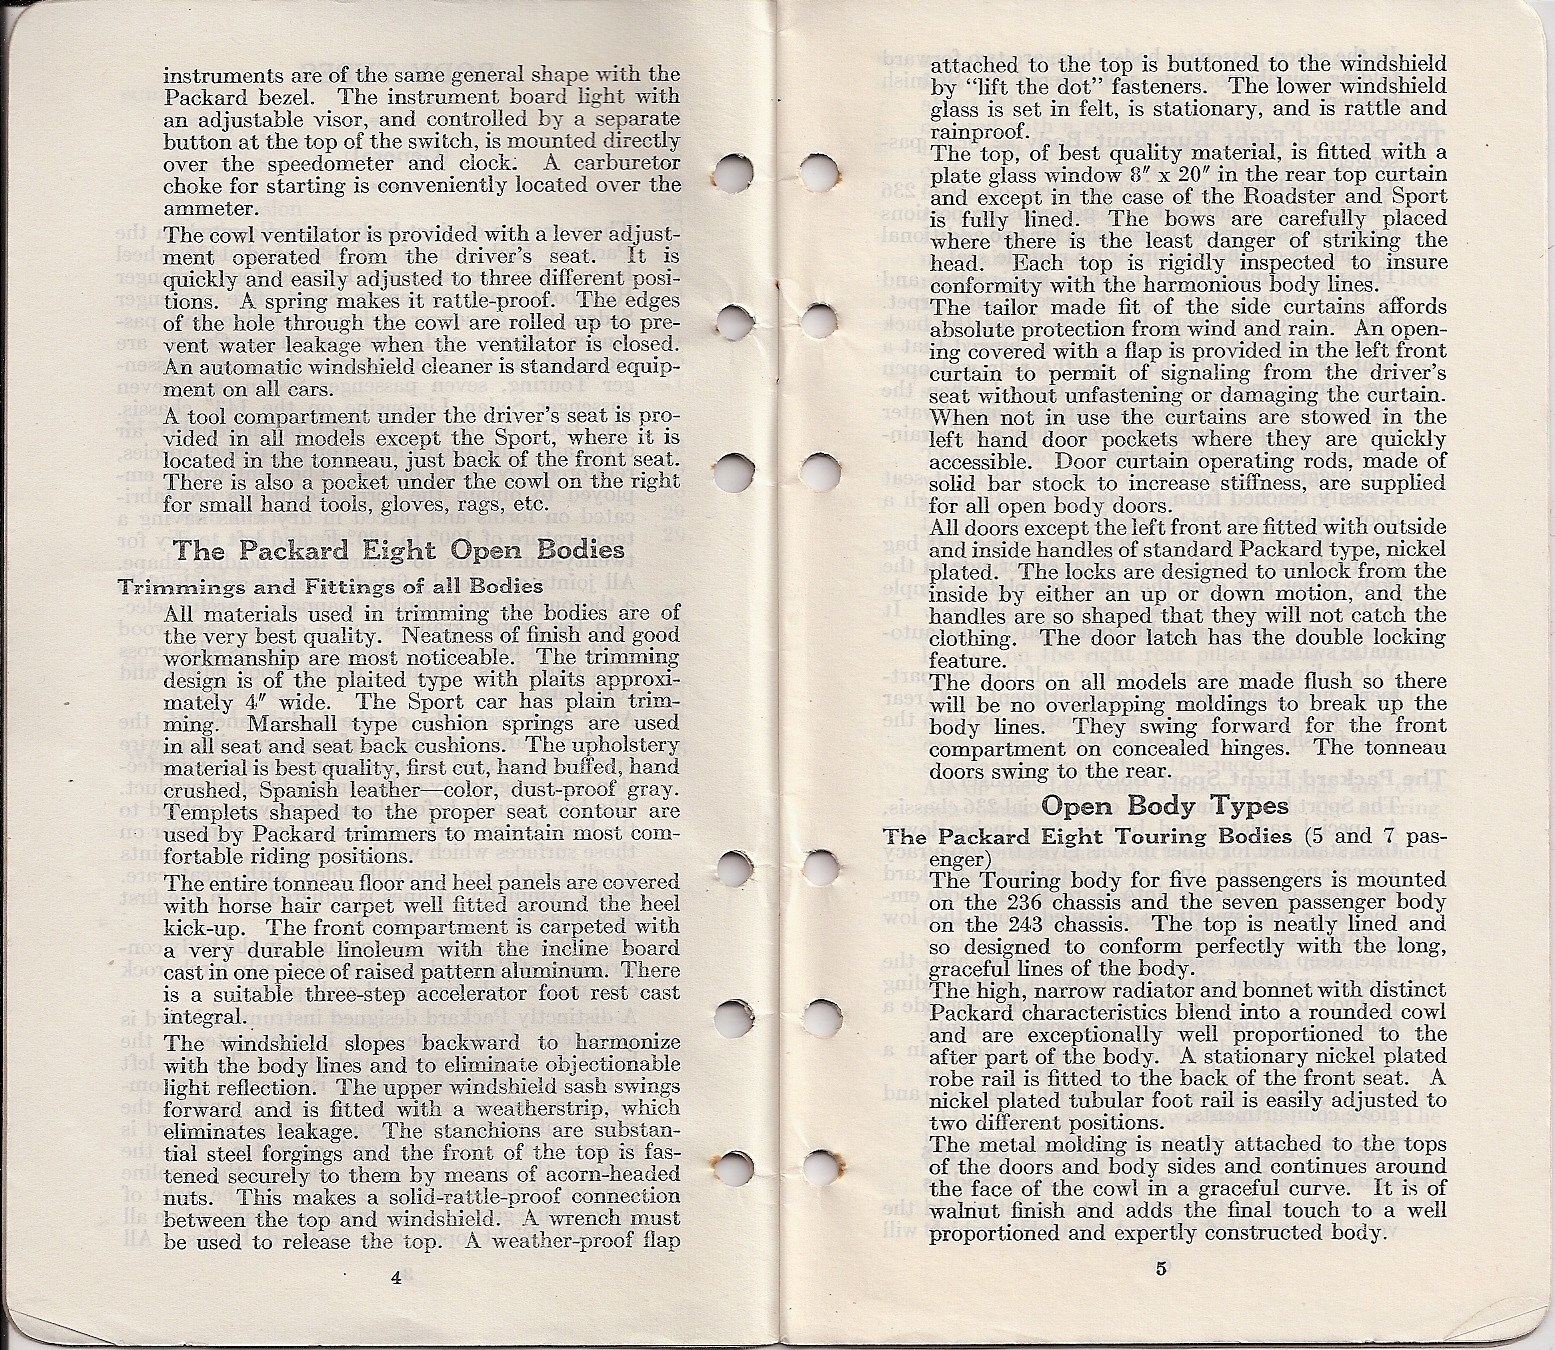 n_1925 Packard Eight Facts Book-04-05.jpg